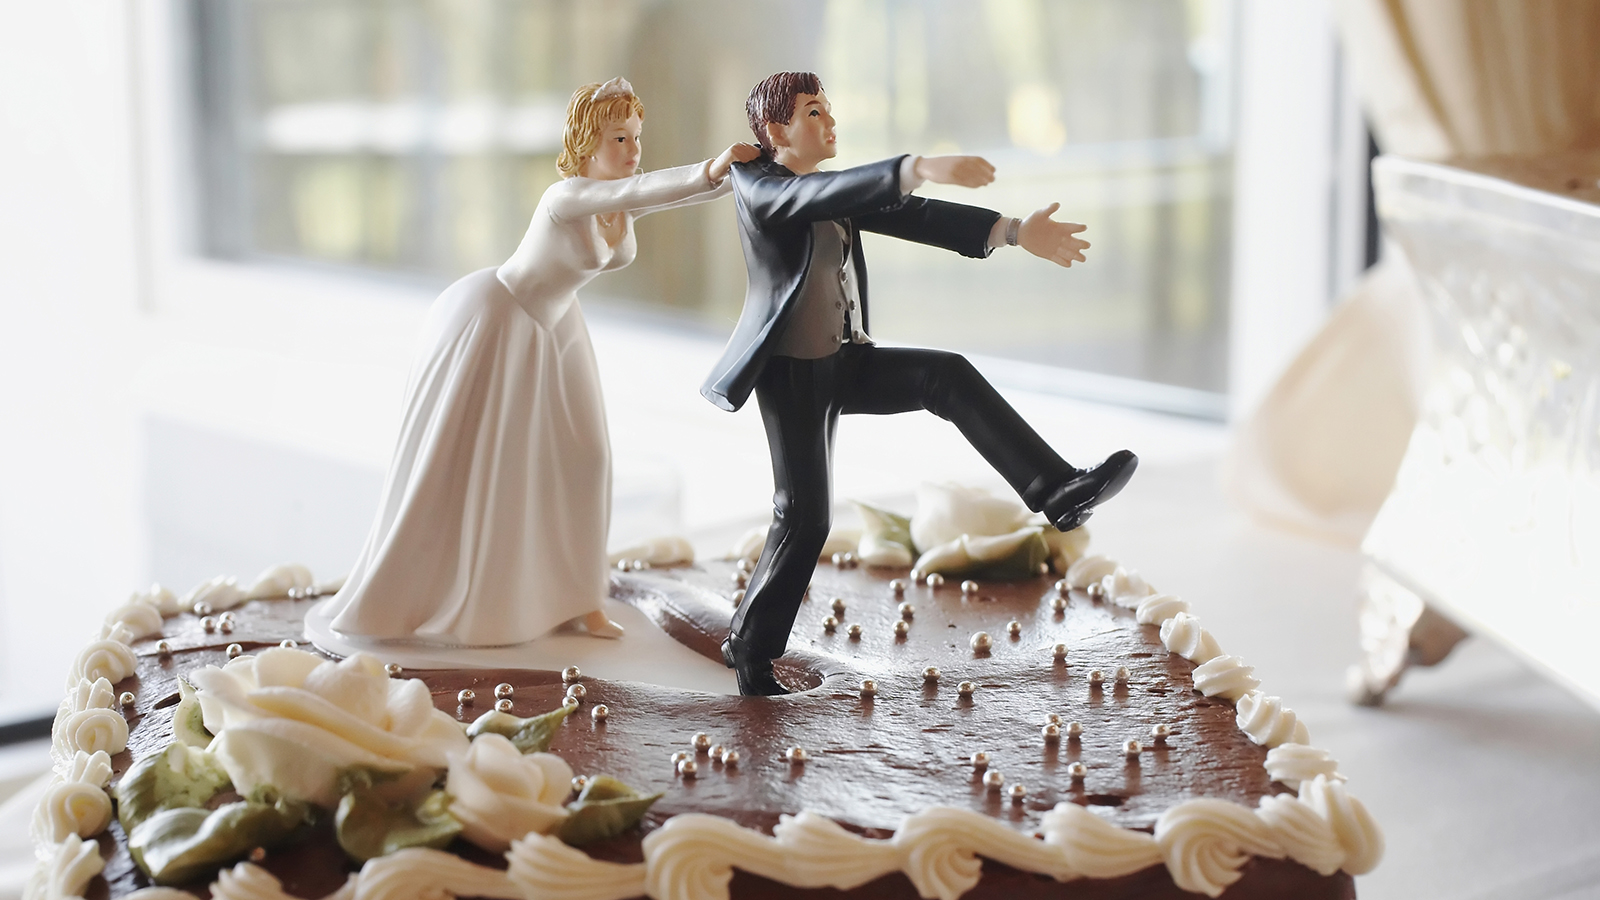 Funny wedding cake top, bride chasing groom